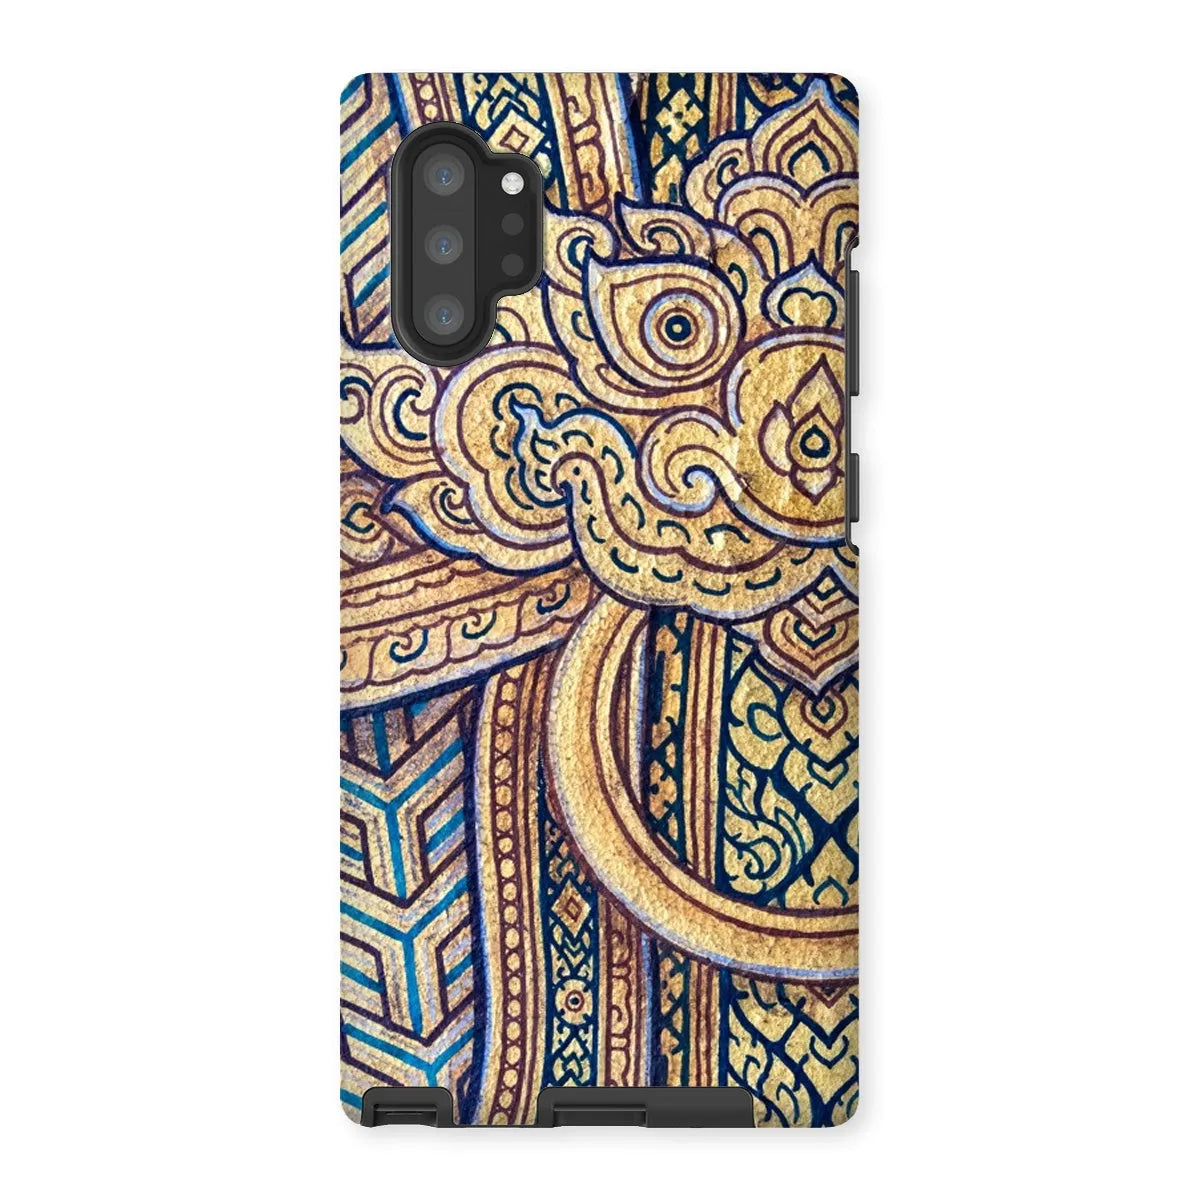 Man’s Best Friend - Thai Aesthetic Art Phone Case - Samsung Galaxy Note 10p / Matte - Mobile Phone Cases - Aesthetic Art